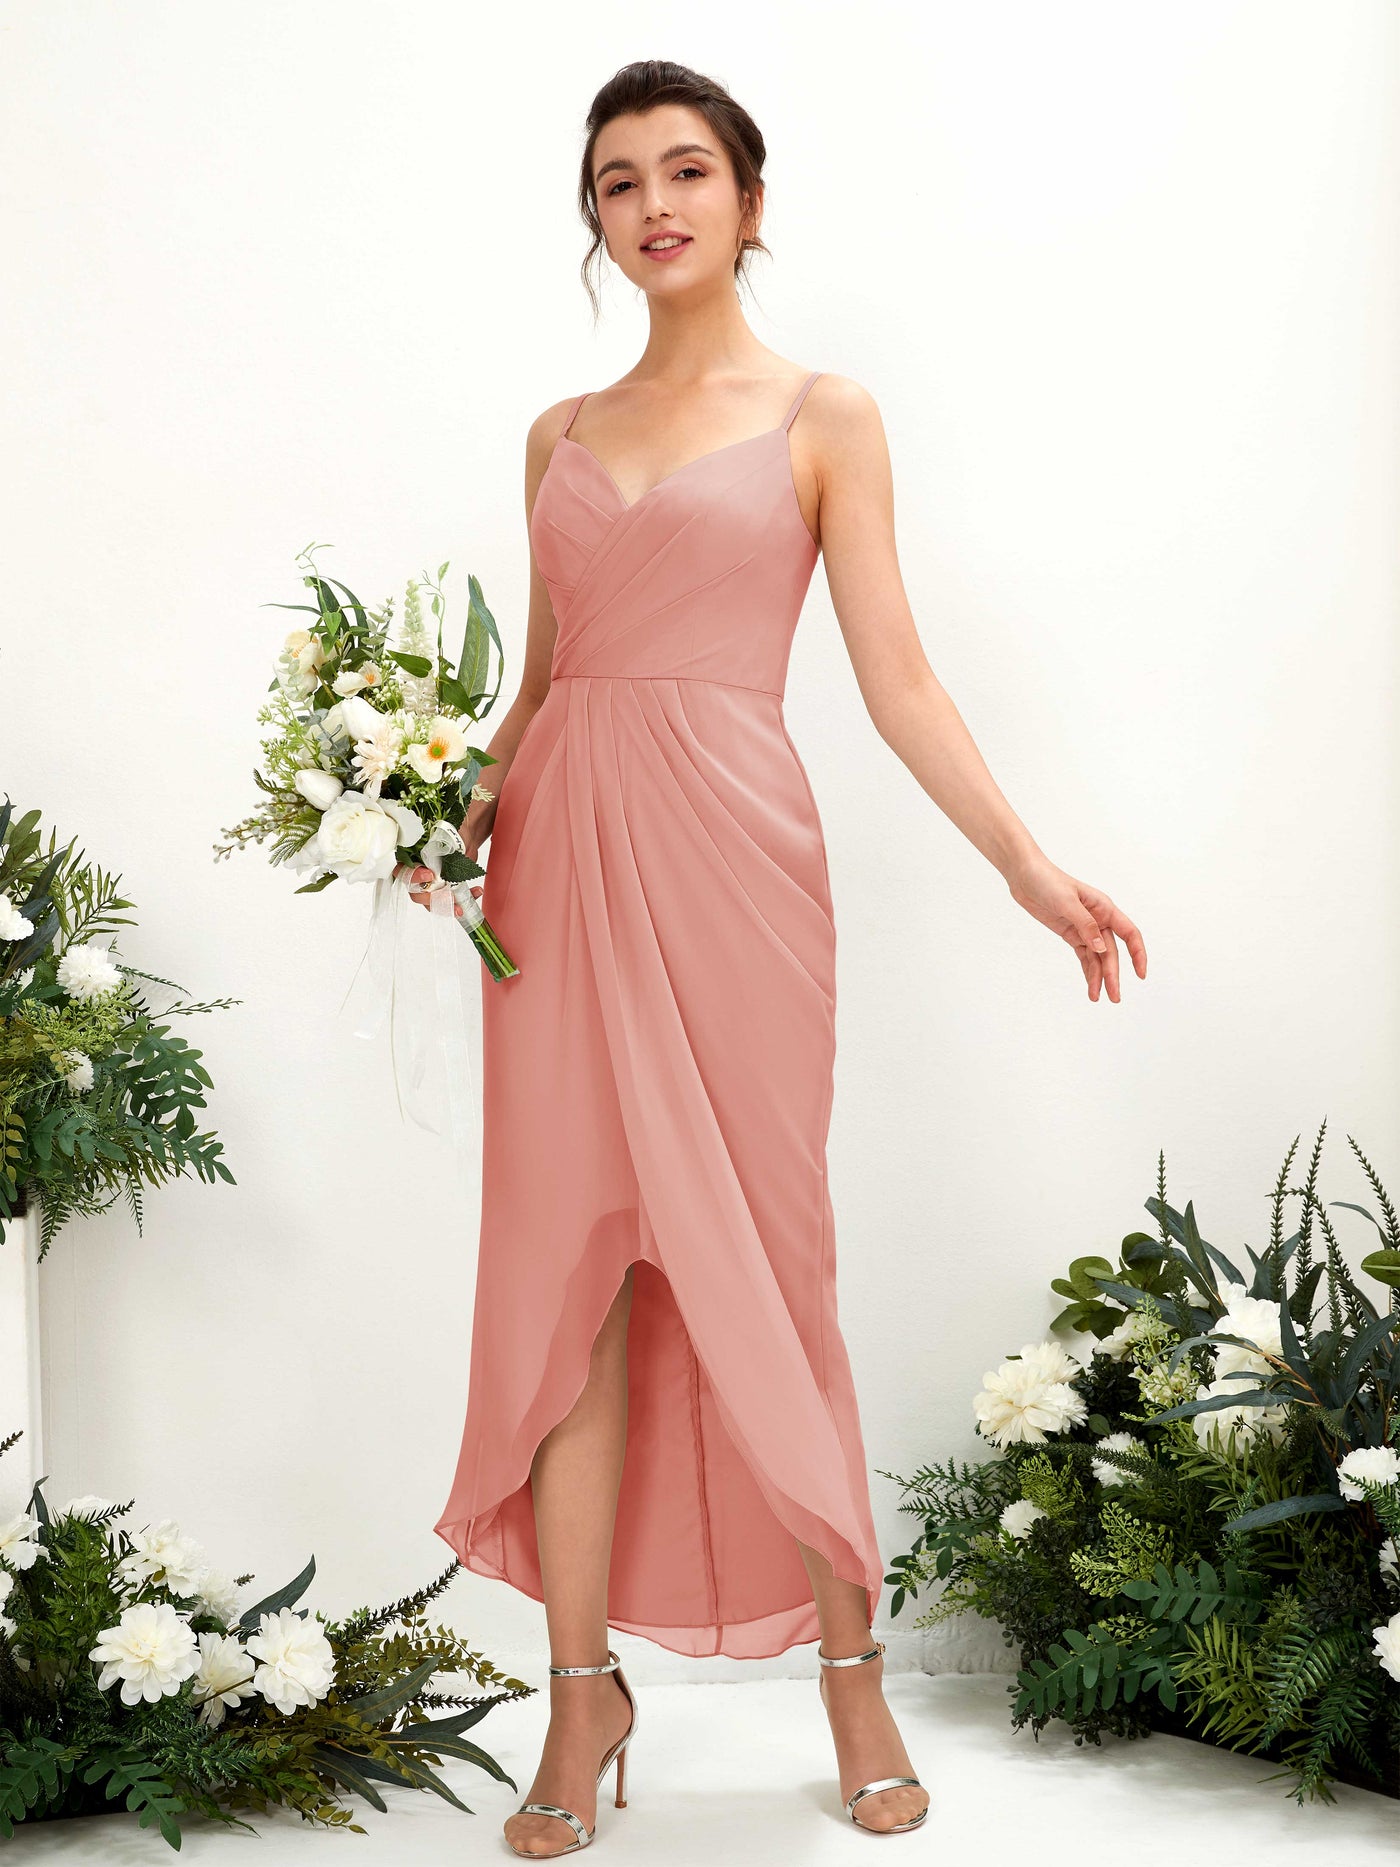 Champagne Rose Bridesmaid Dresses Bridesmaid Dress Chiffon Spaghetti-straps Tea Length Sleeveless Wedding Party Dress (81221306)#color_champagne-rose